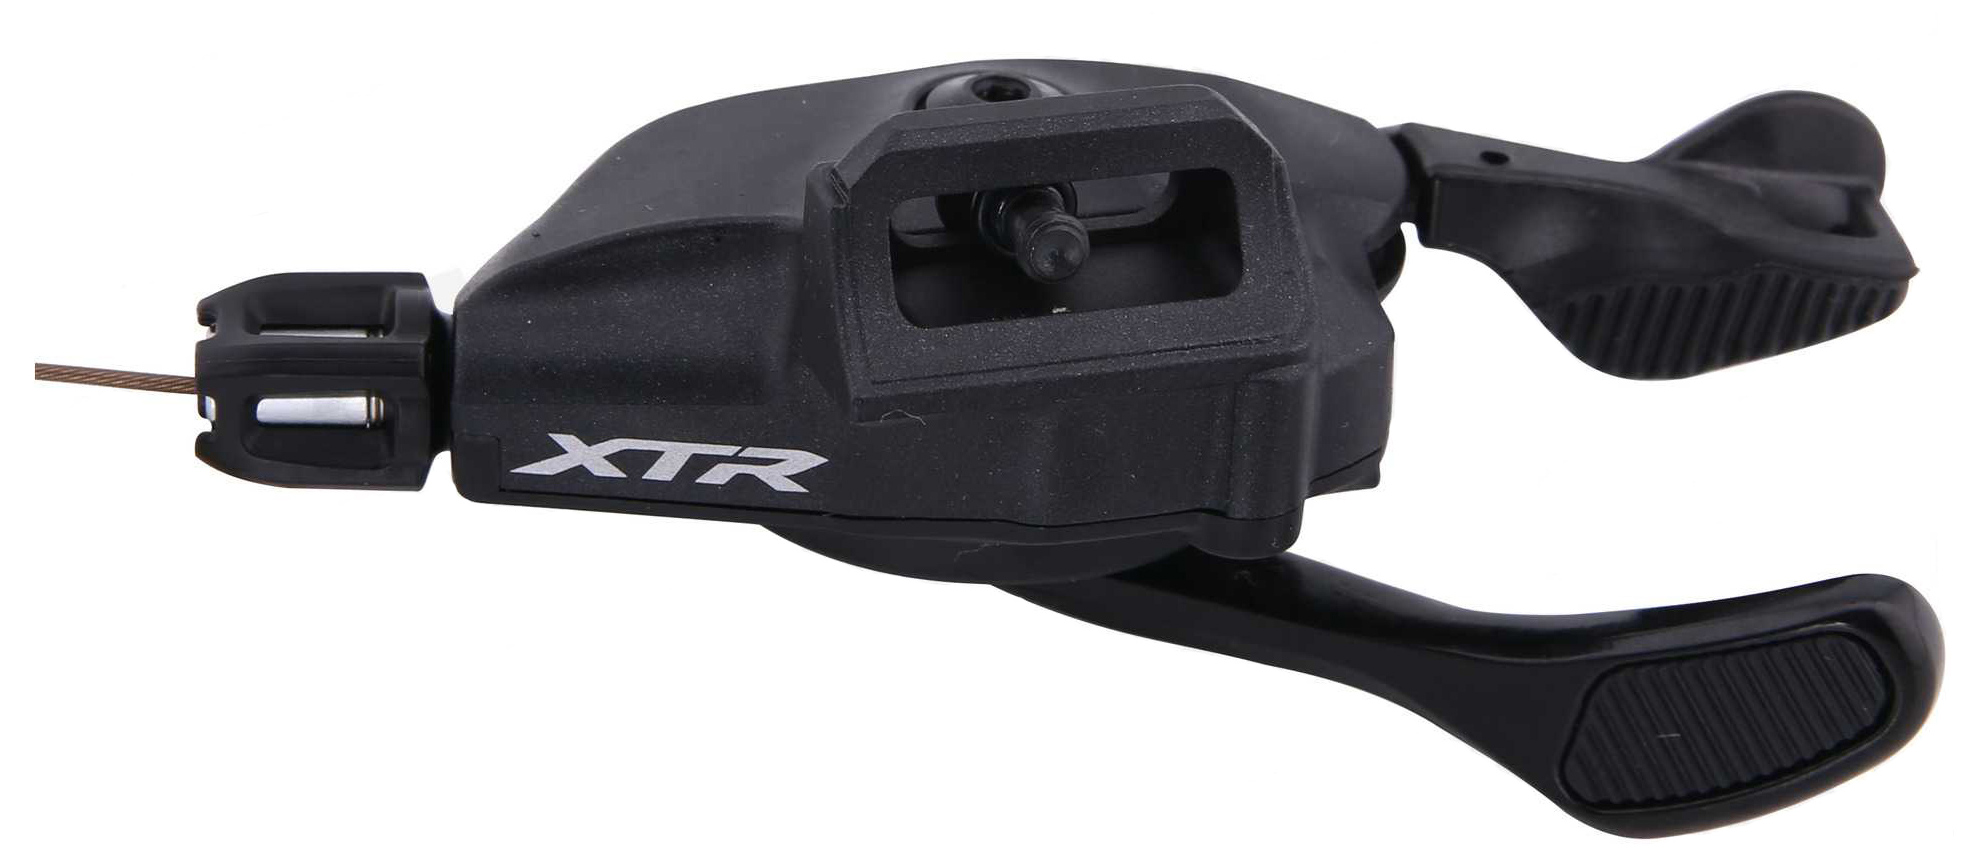  Шифтер для велосипеда Shimano XTR M9100, I-spec EV, 11/12ск (ISLM9100IRAP)